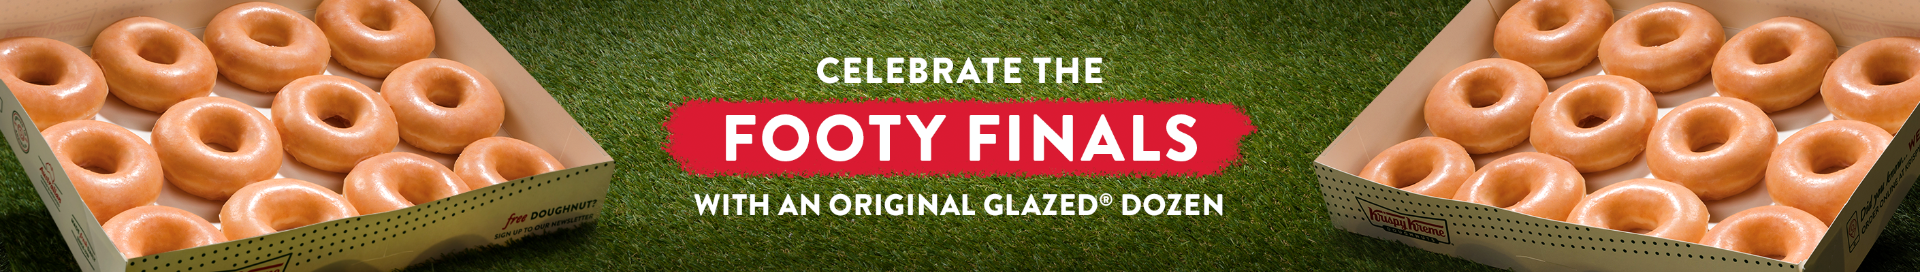 Celebrate Footy Finals with an Original Glazed® Dozen Pack - Original Glazed Dozens with the Krispy Kreme white Dozen box set on a playing field - set up like a showdown poster.